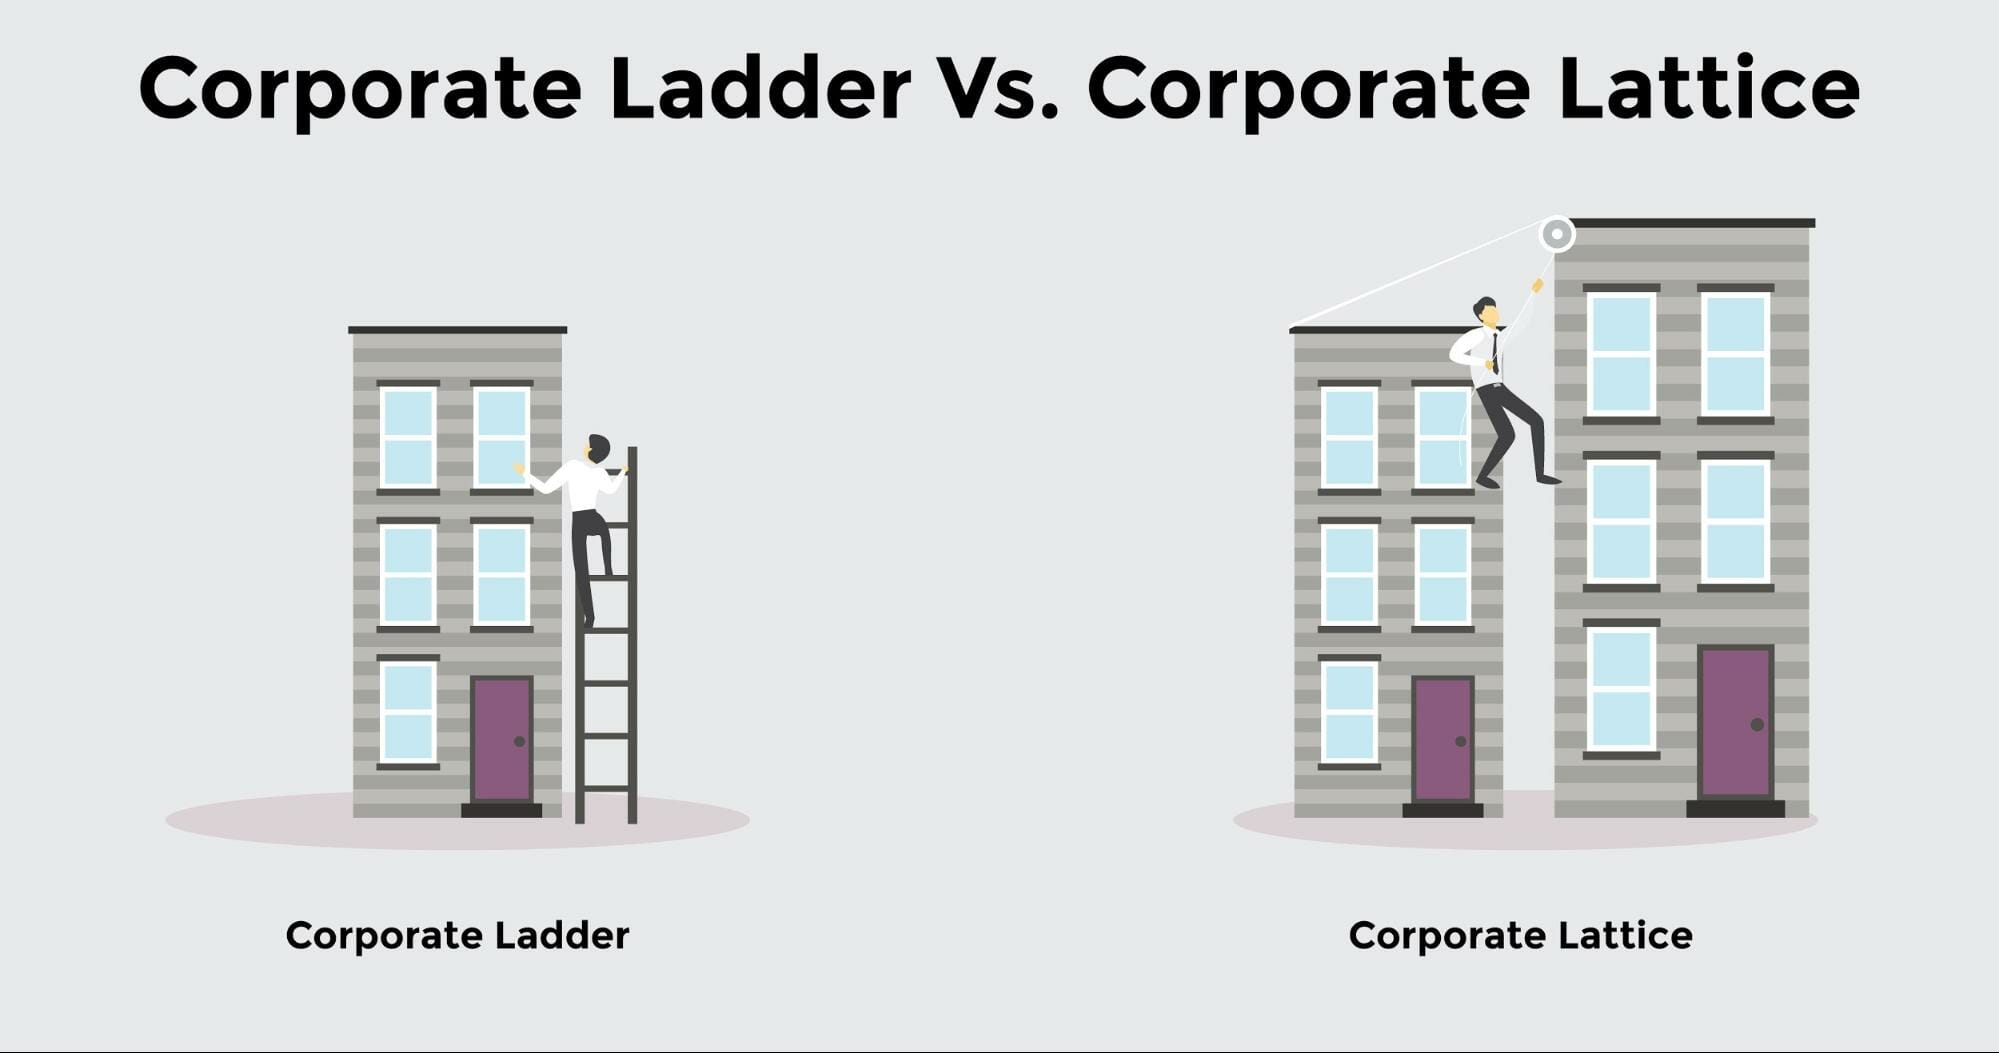 Corporate Ladder vs. Corporate Lattice